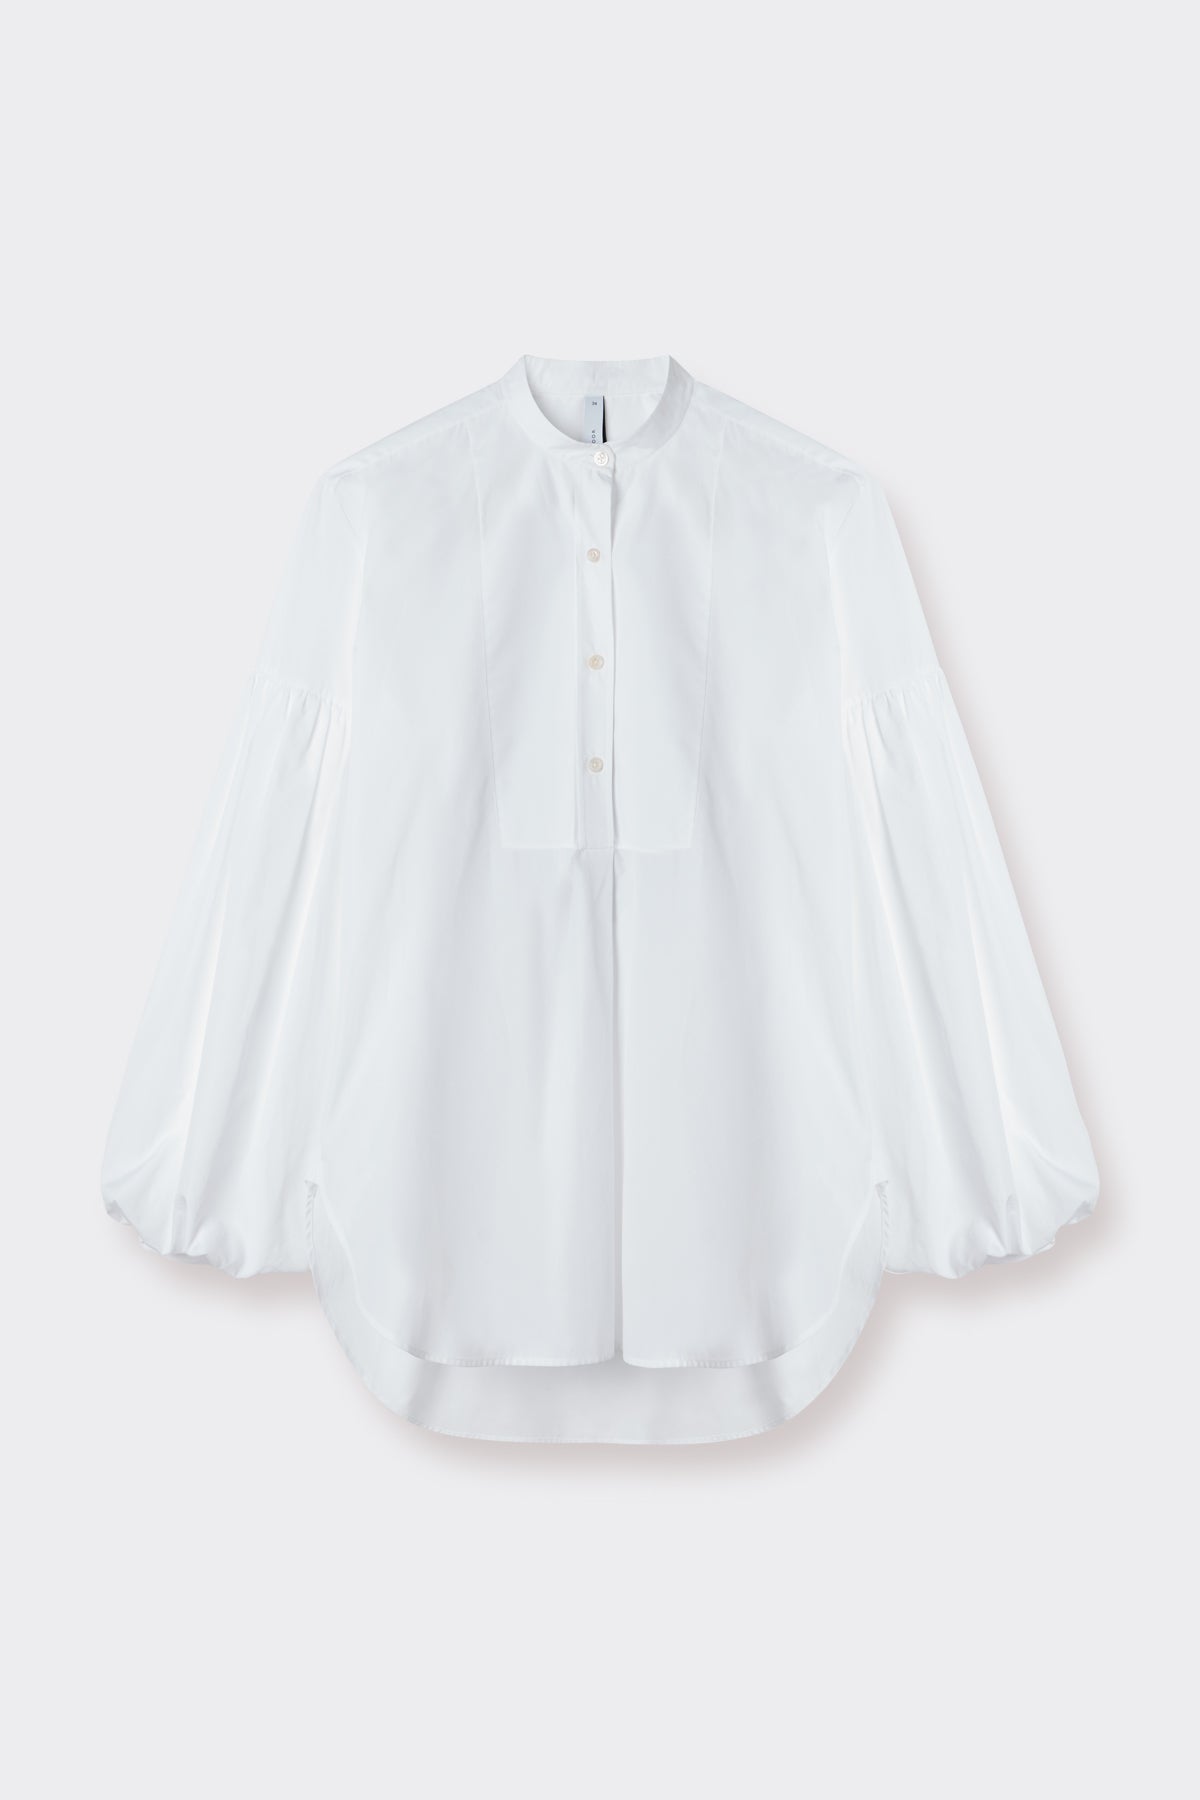 Aroha Shirt in White| Noon by Noor